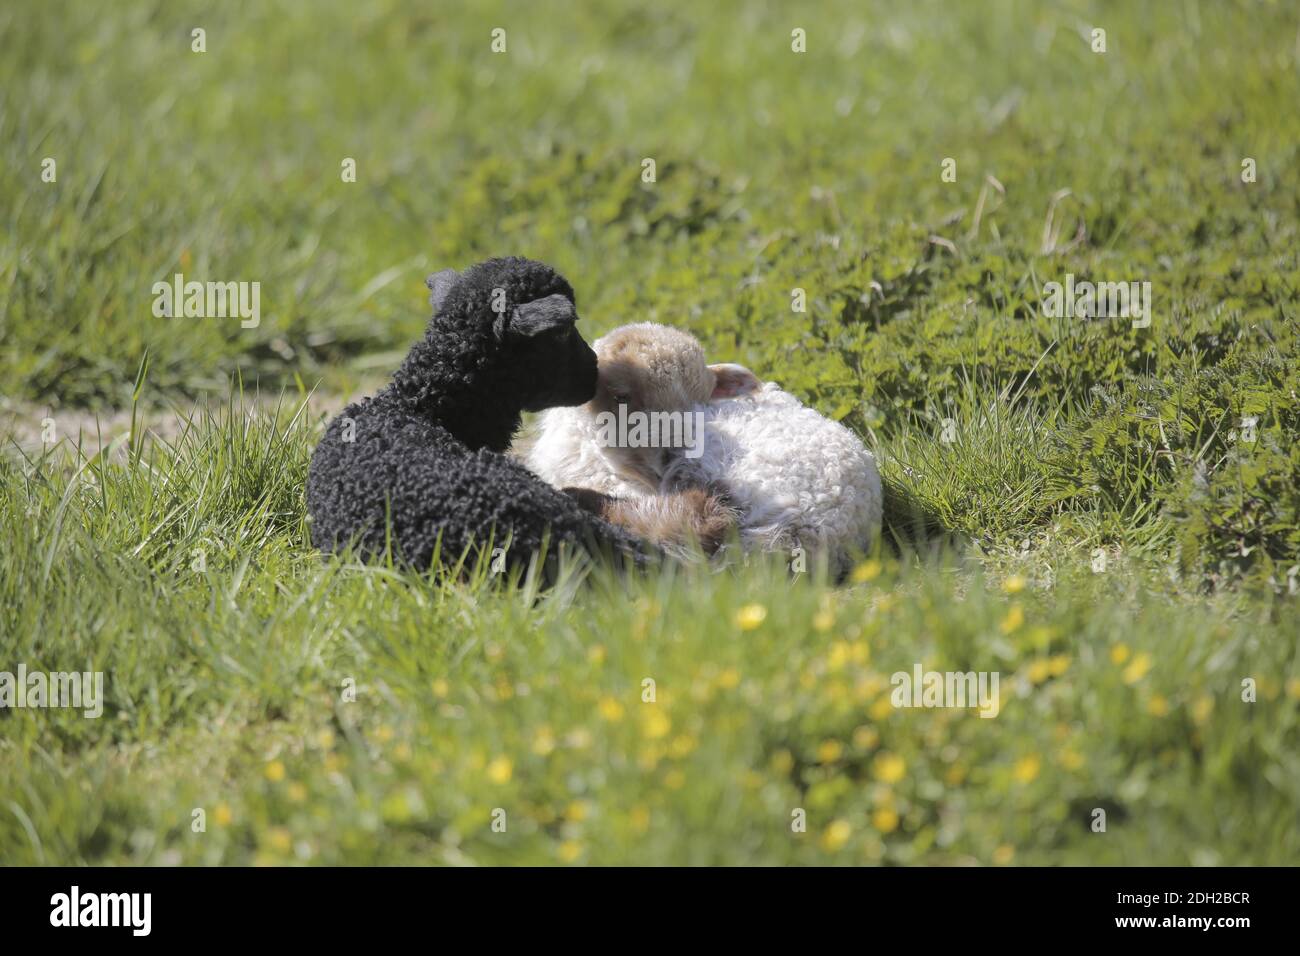 Ragged sheep, Ovis aries strepsiceros Hungaricus Stock Photo